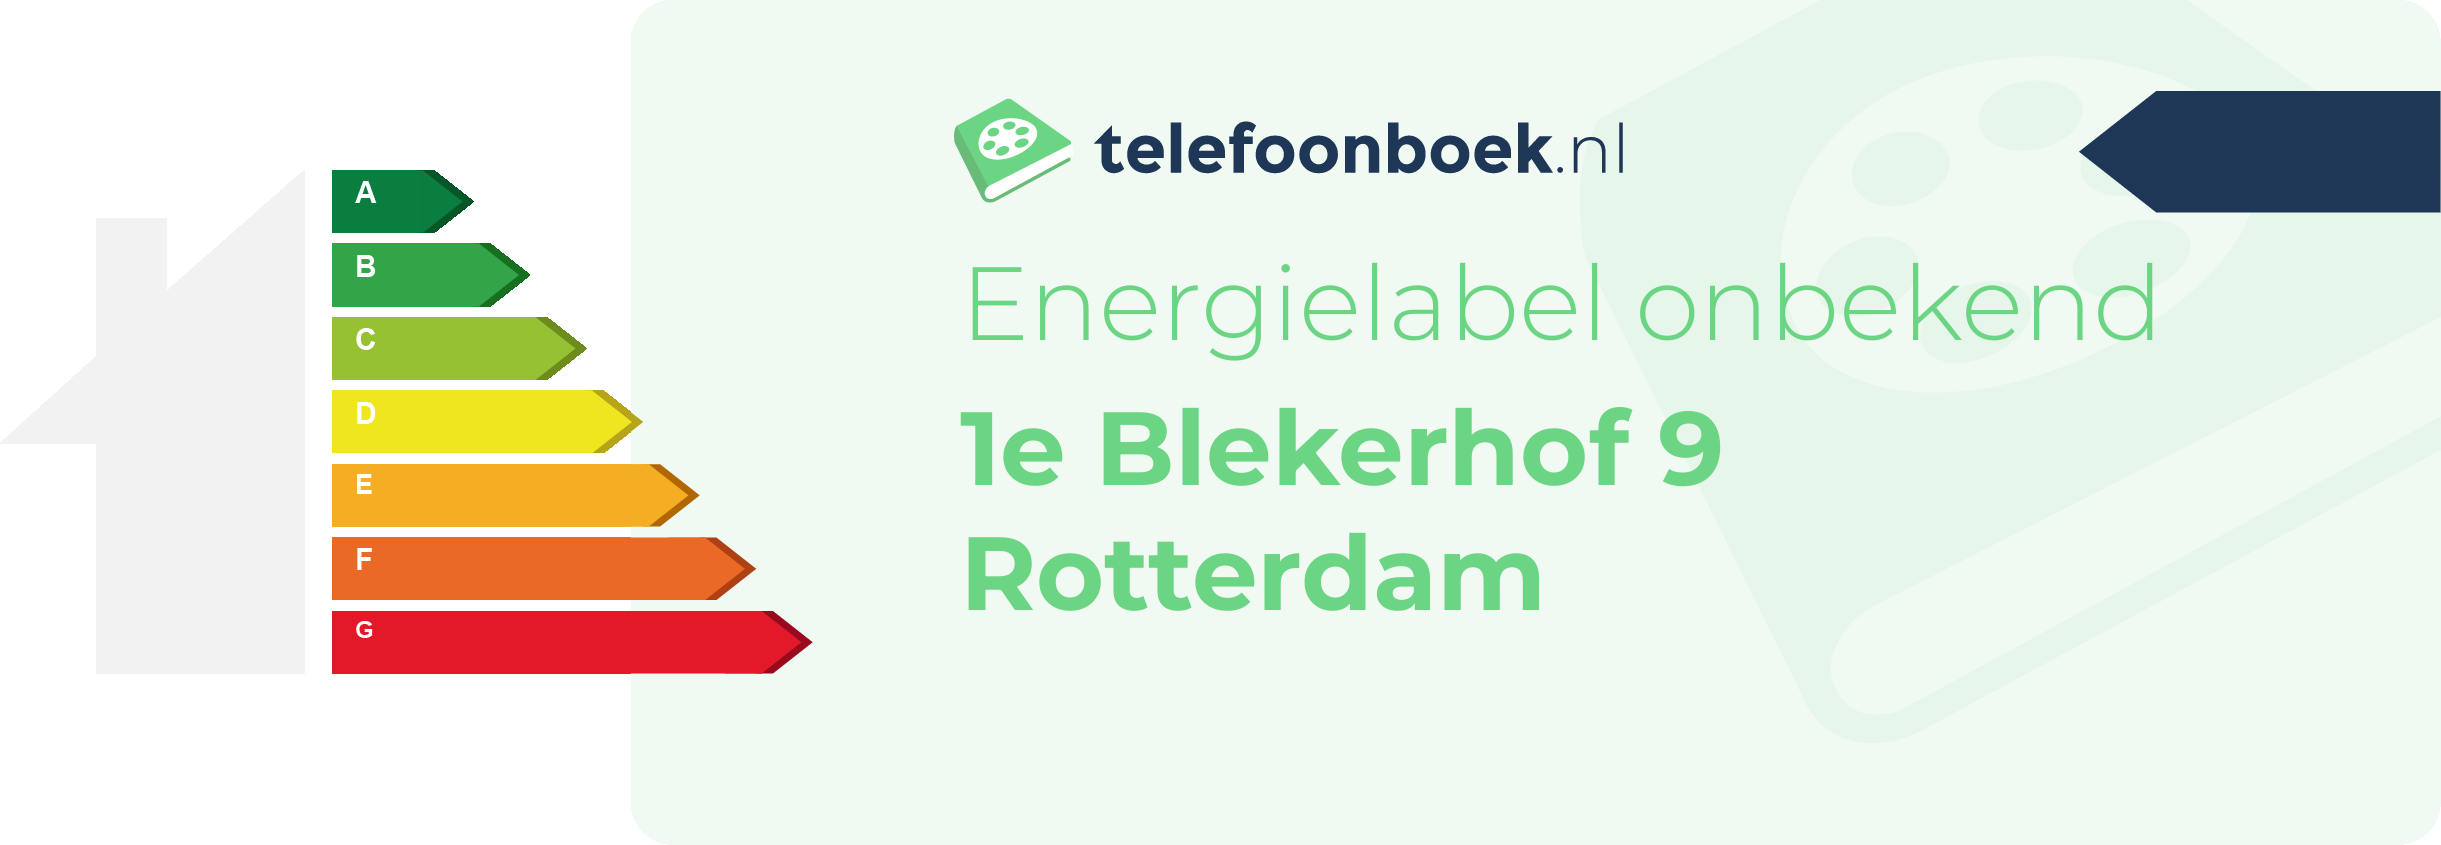 Energielabel 1e Blekerhof 9 Rotterdam